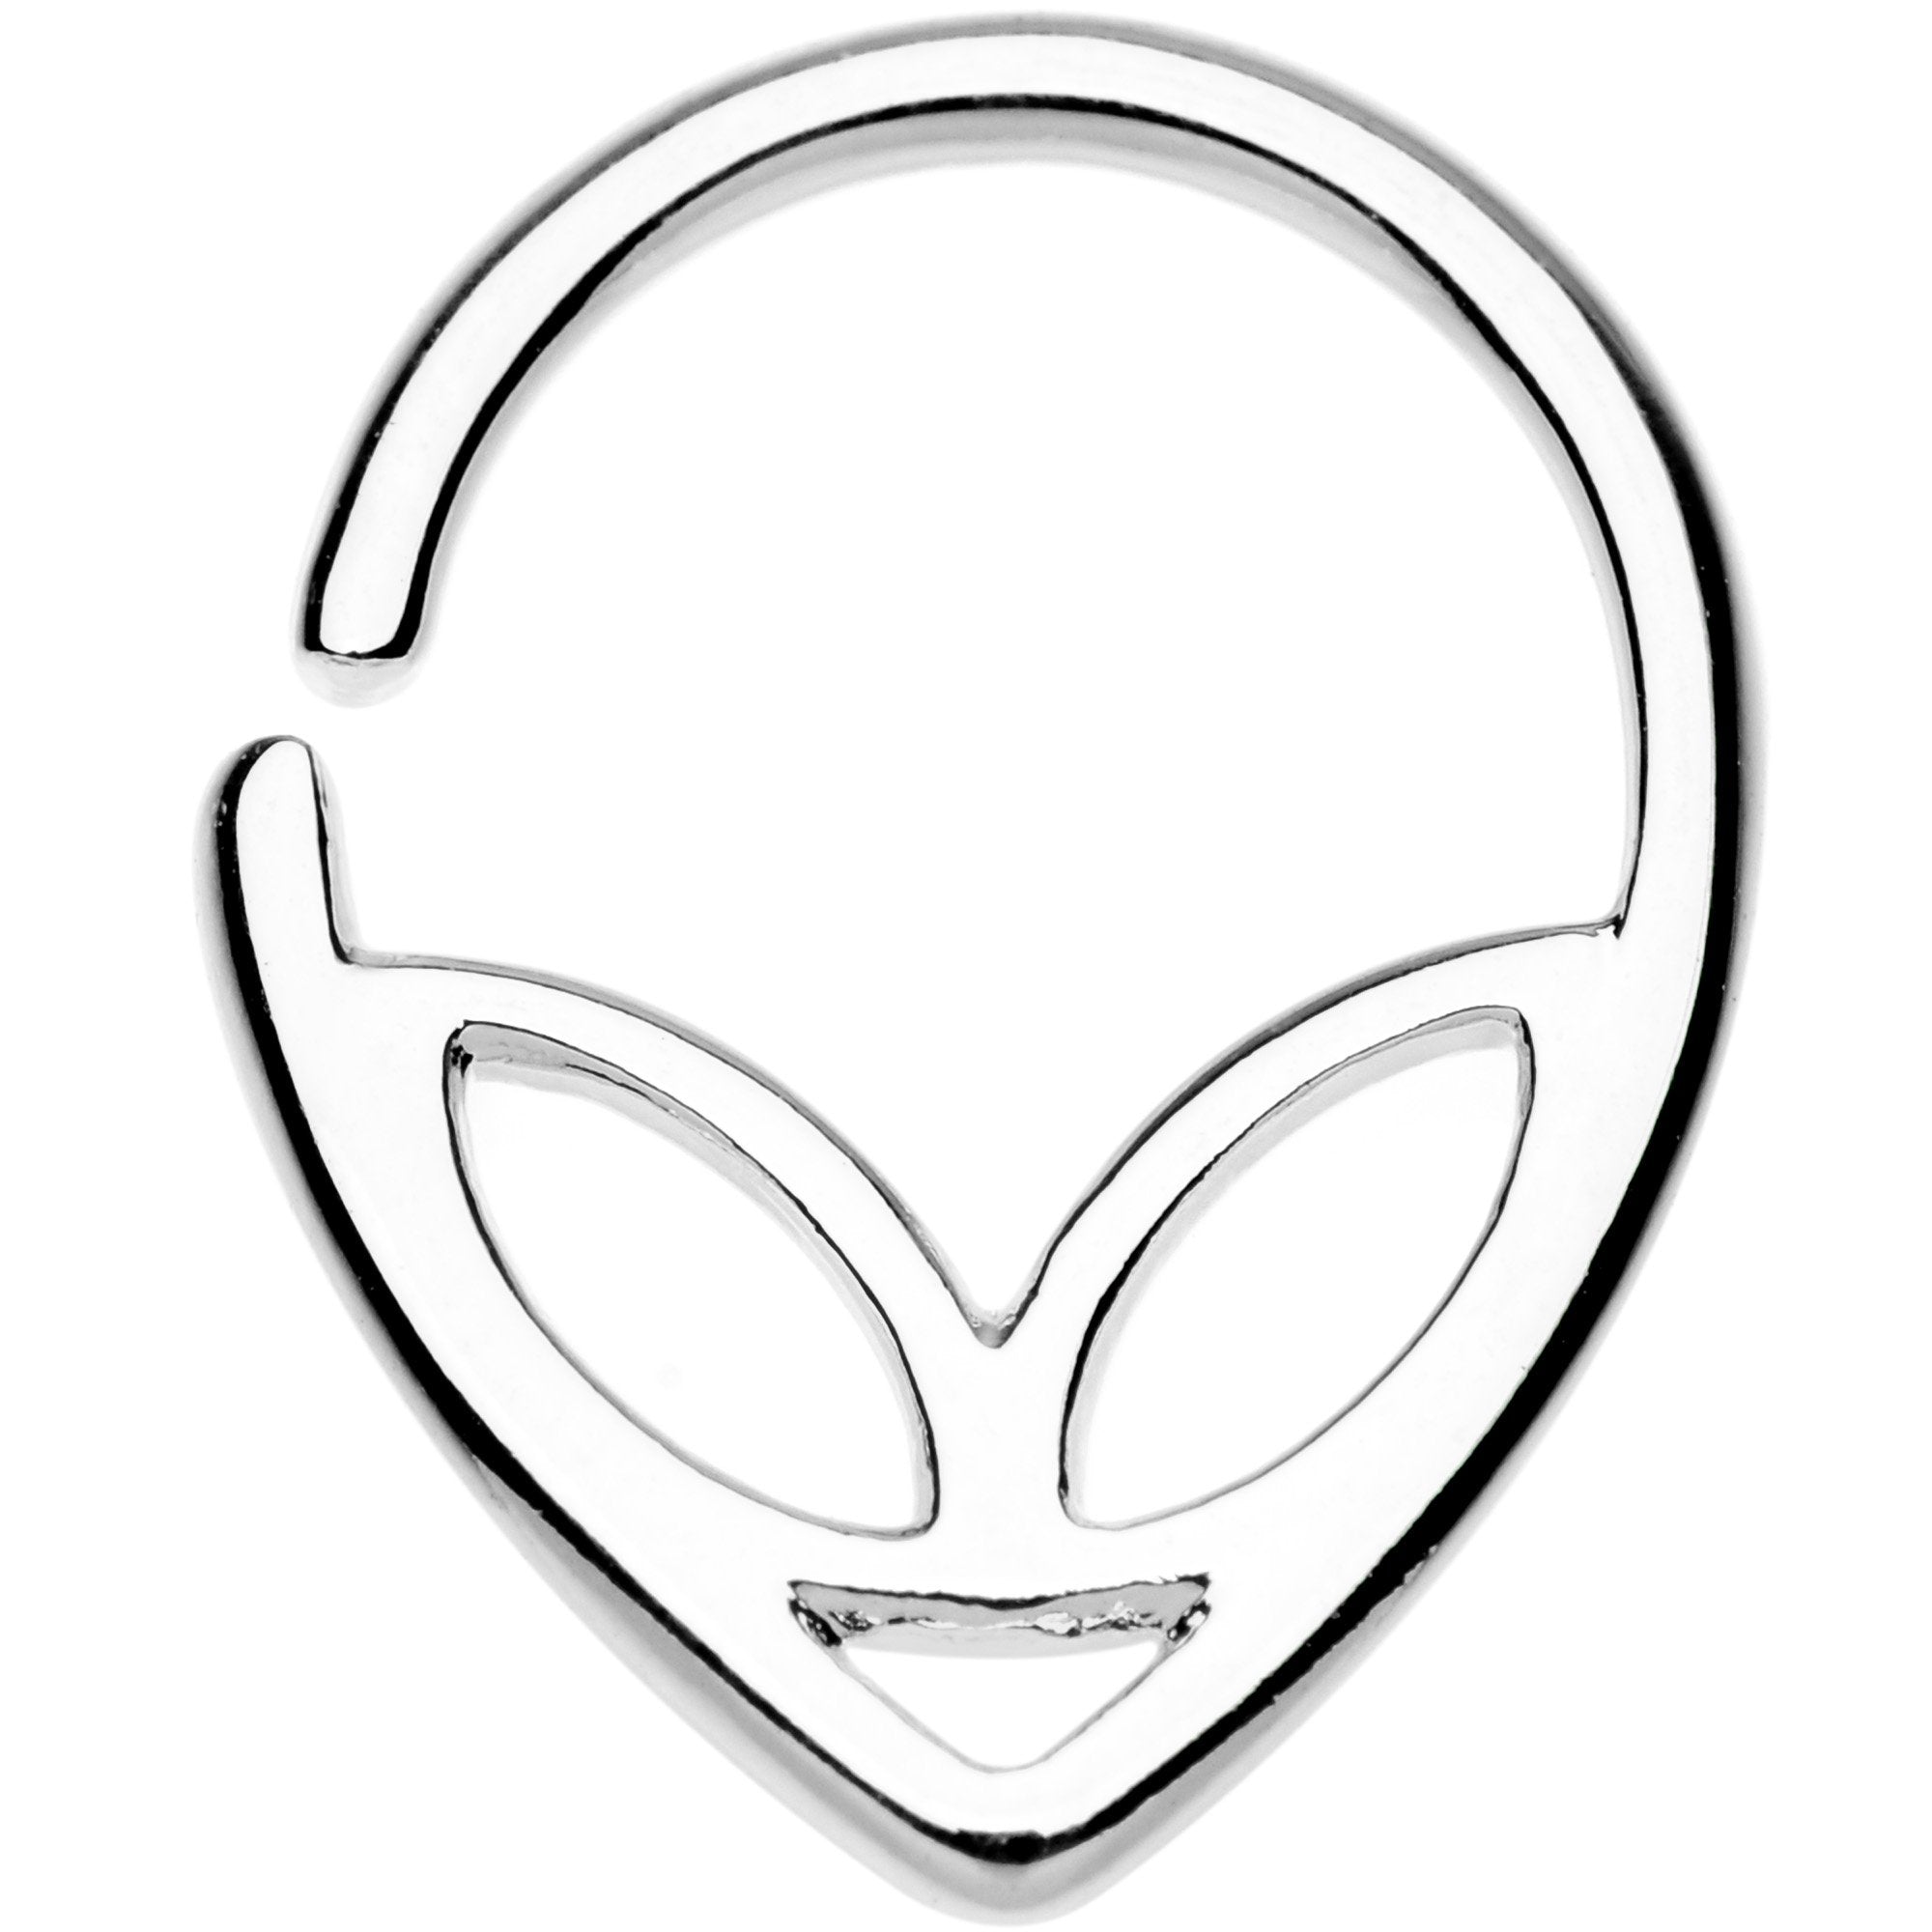 16 Gauge 3/8 UFO Alien Septum Ring